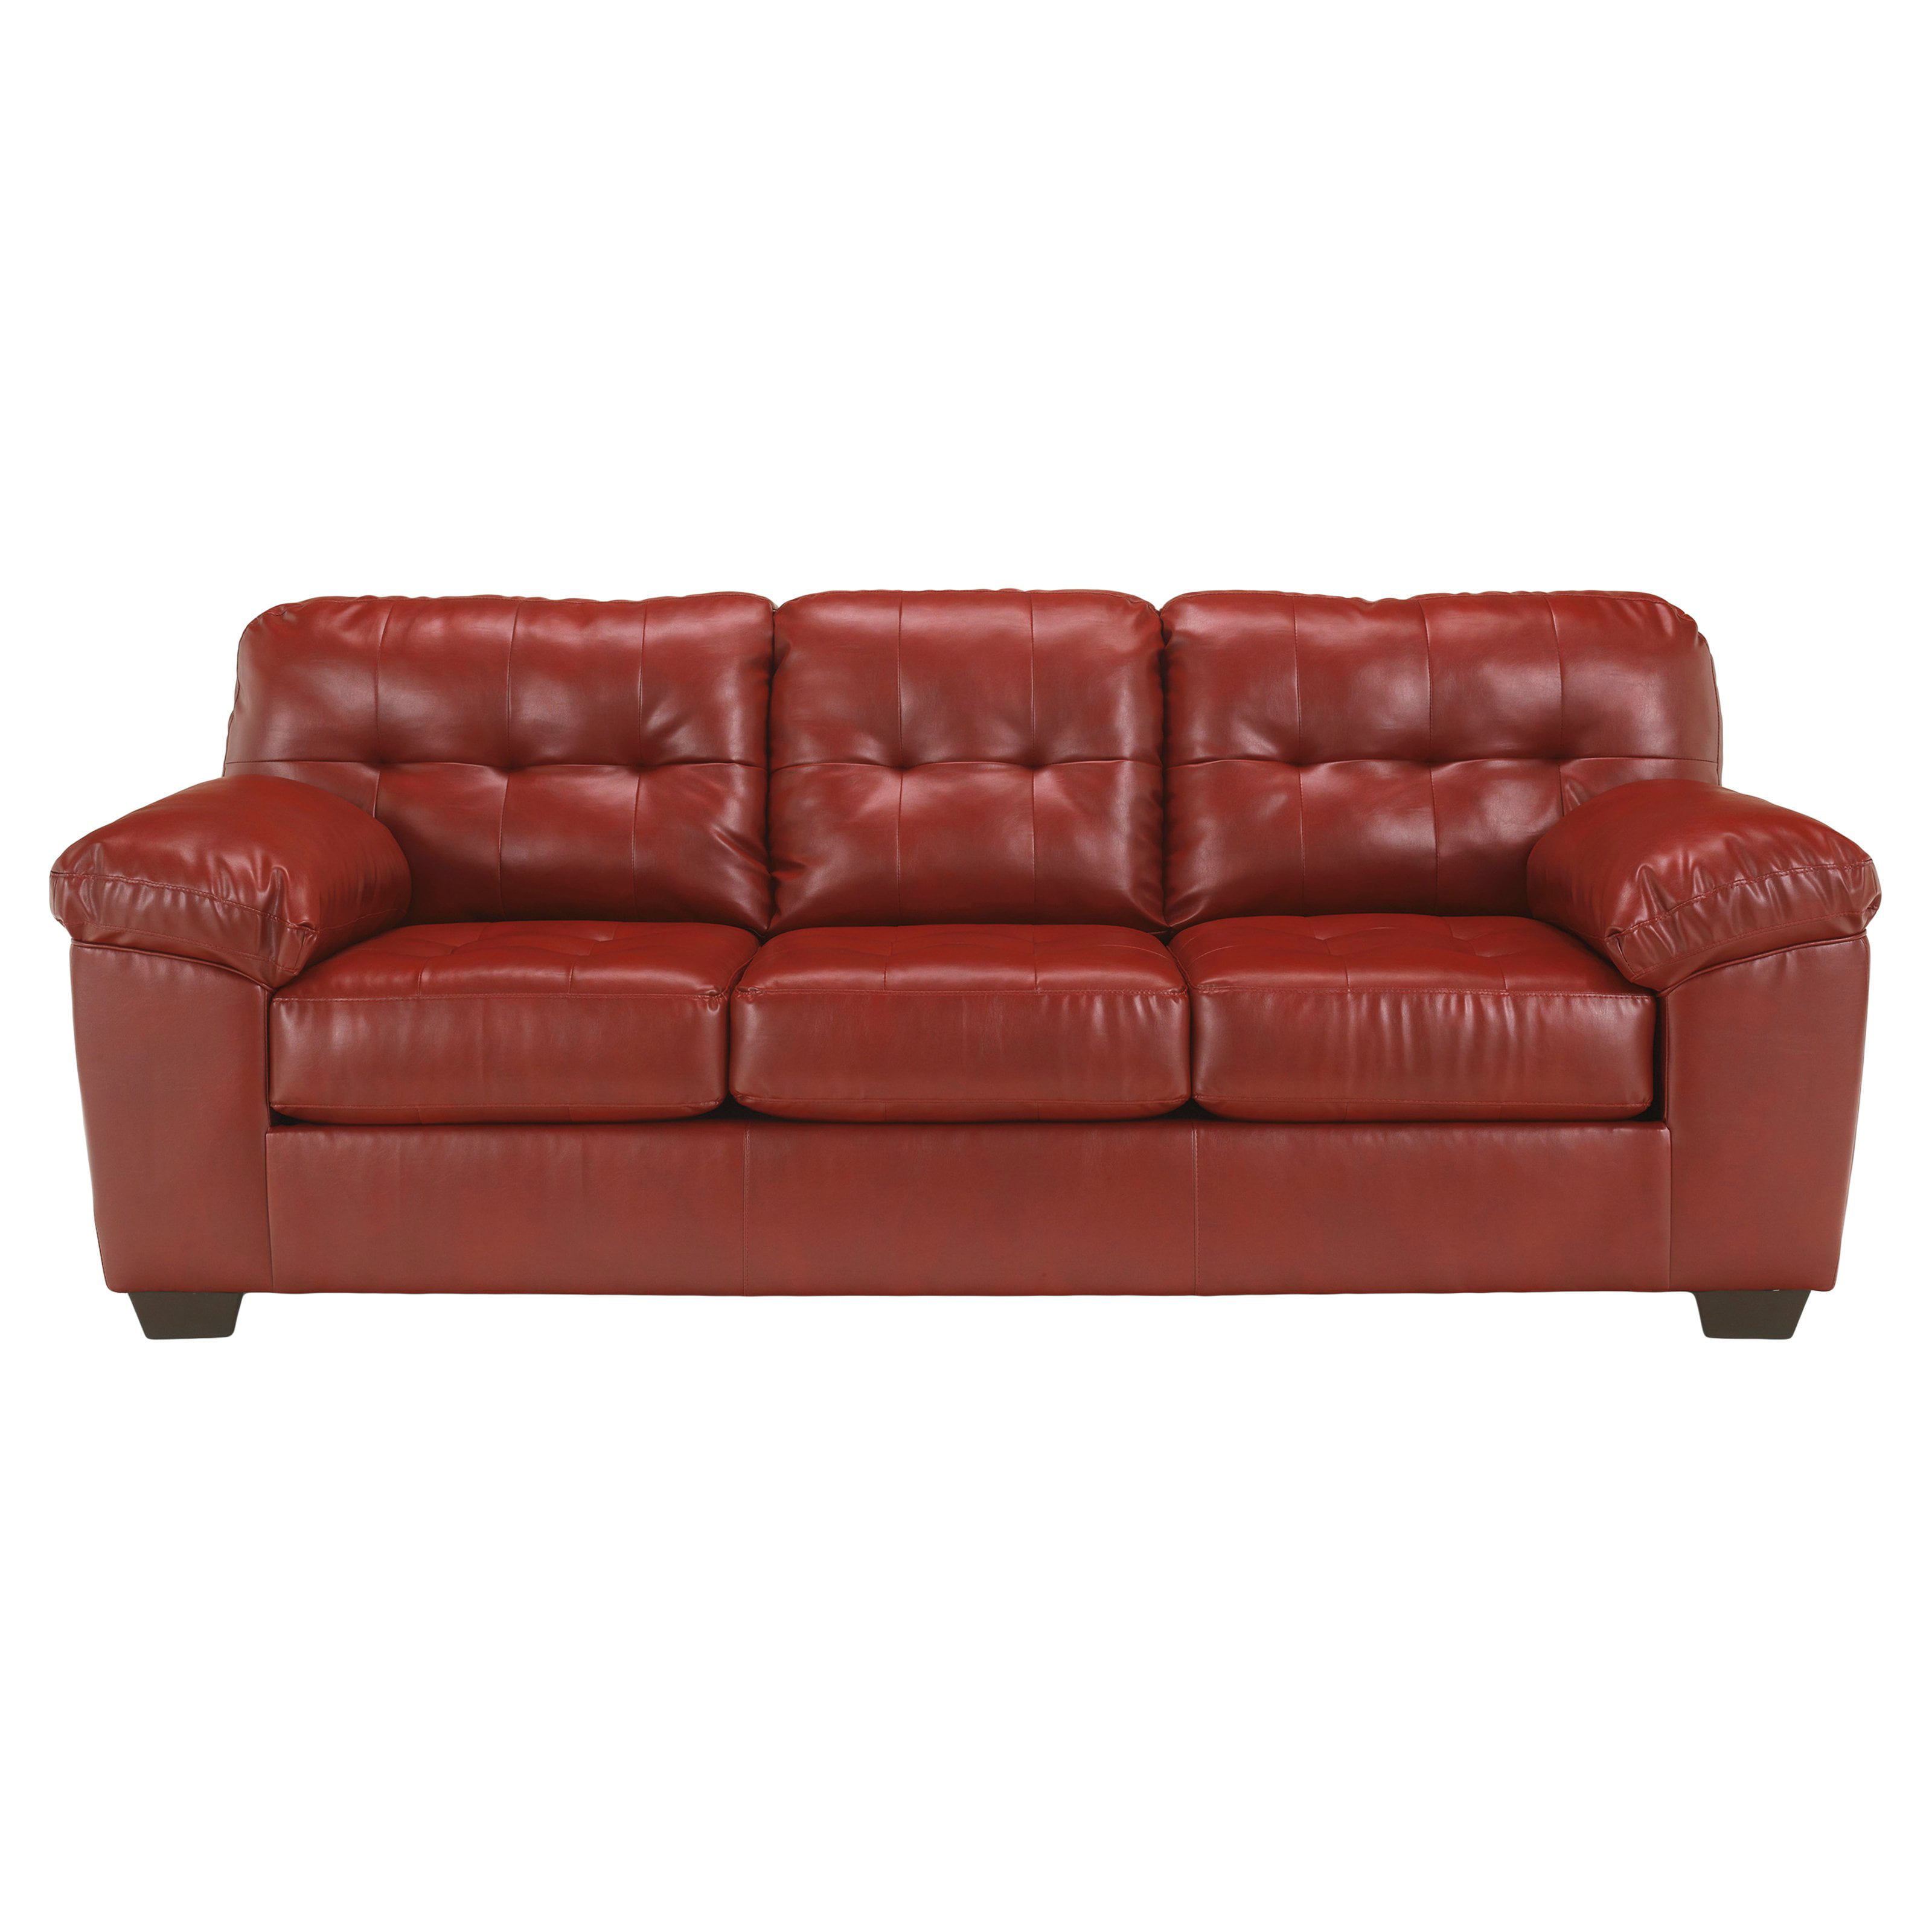 Ashley Alliston Leather Sofa Red, Ashley Furniture Faux Leather Reviews